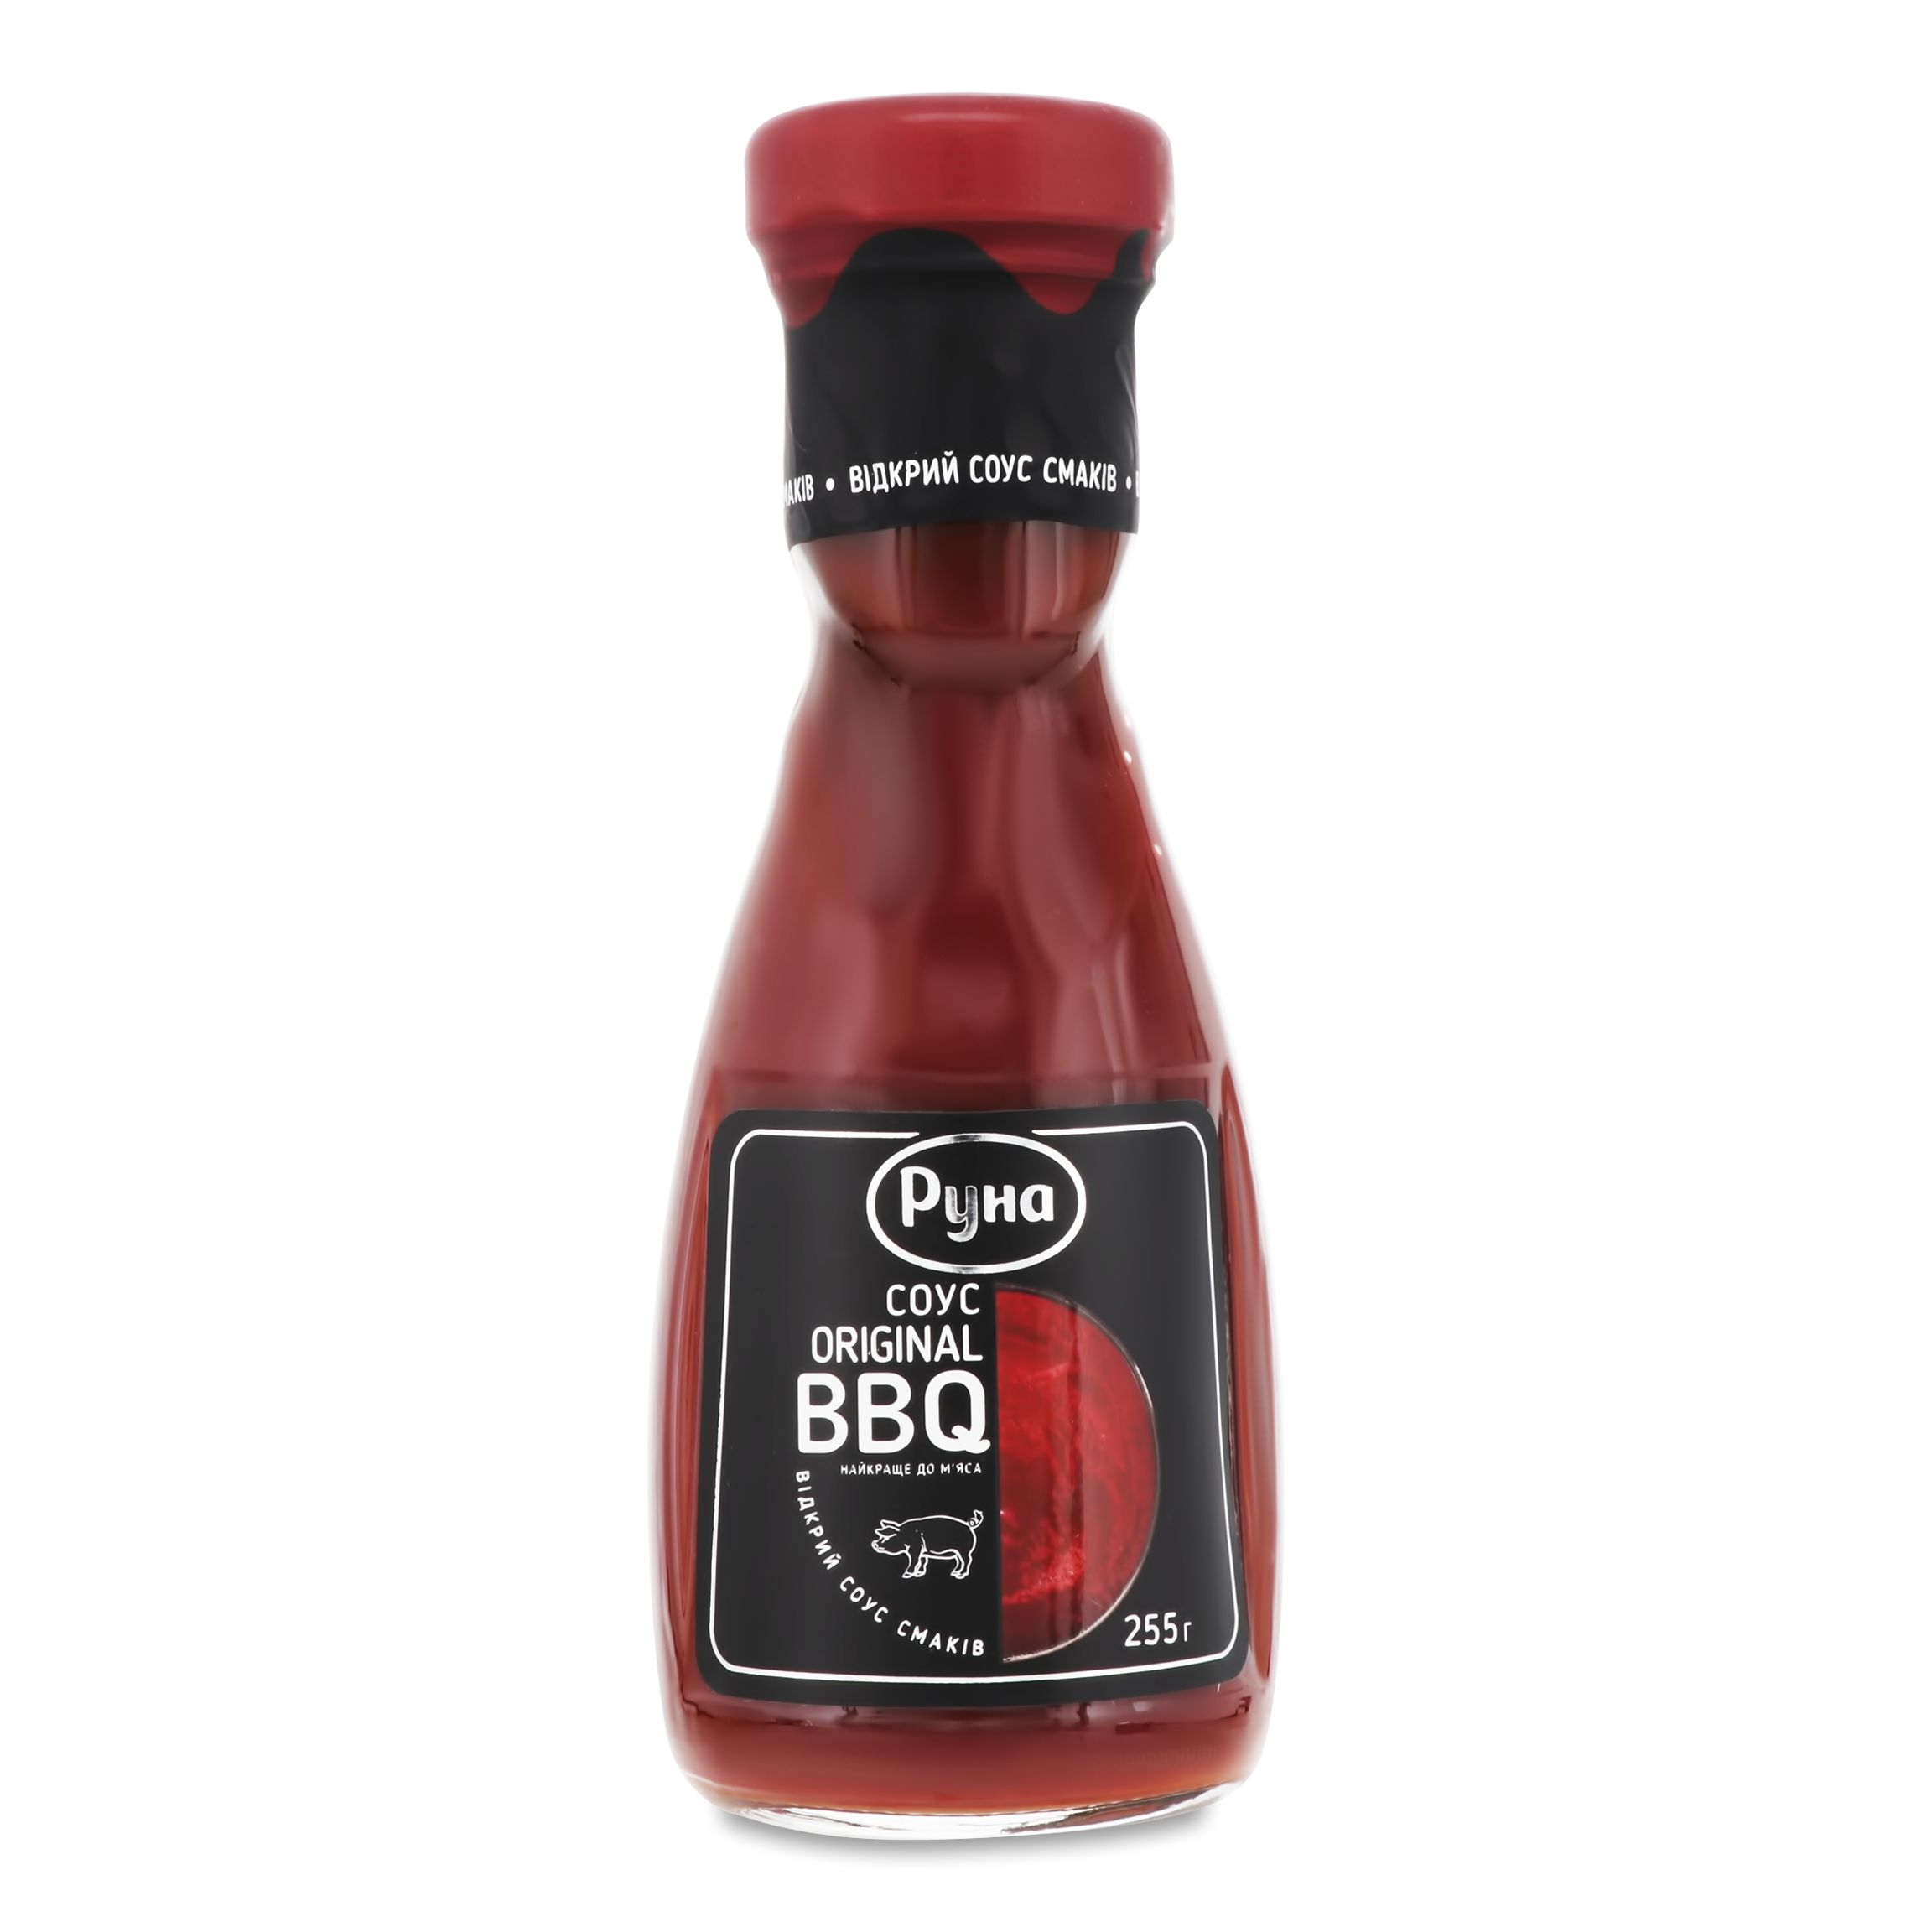 Runa Original BBQ Tomato Sauce 255g